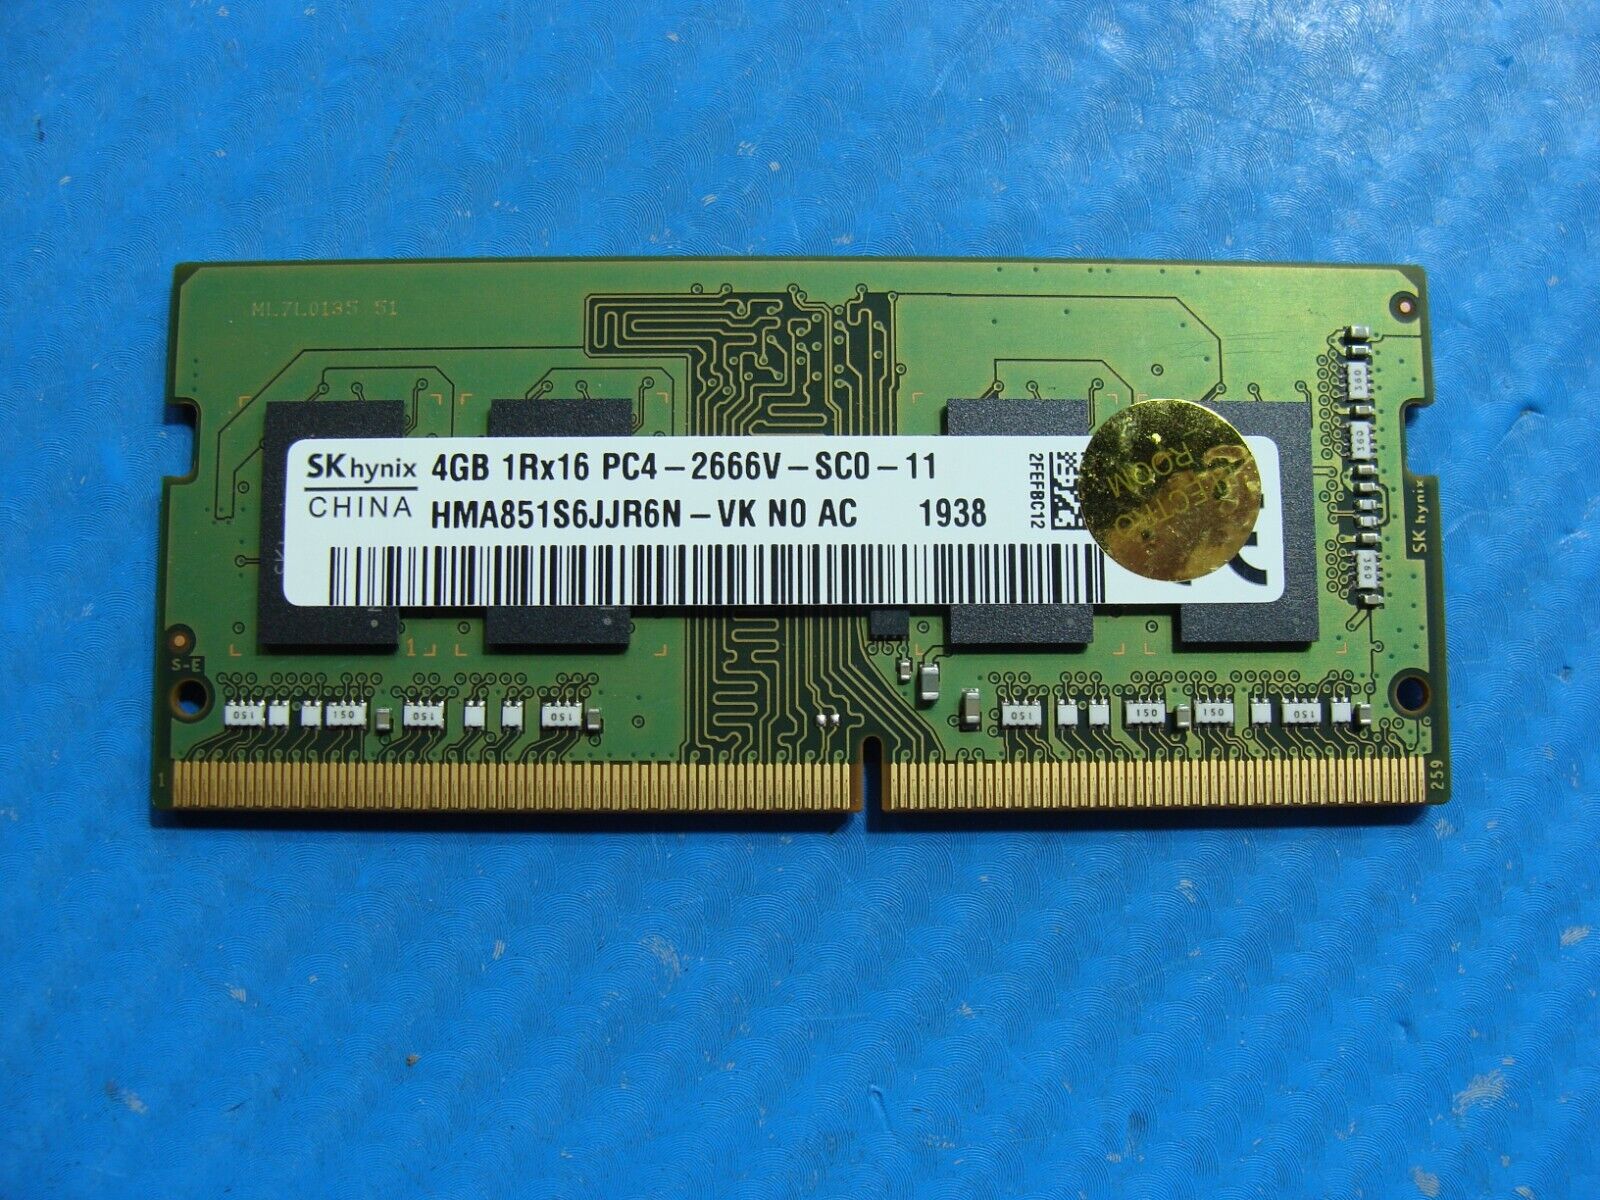 Dell G3 15 3590 SK Hynix 4GB PC4-2666V Memory RAM SO-DIMM HMA851S6JJR6N-VK